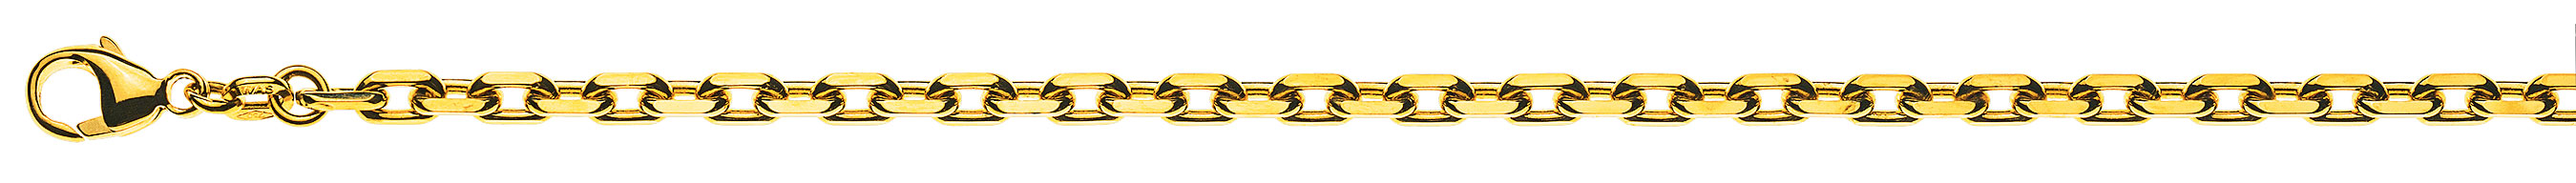 AURONOS Prestige Necklace yellow gold 18K anchor 4-ply 60cm 3.5mm